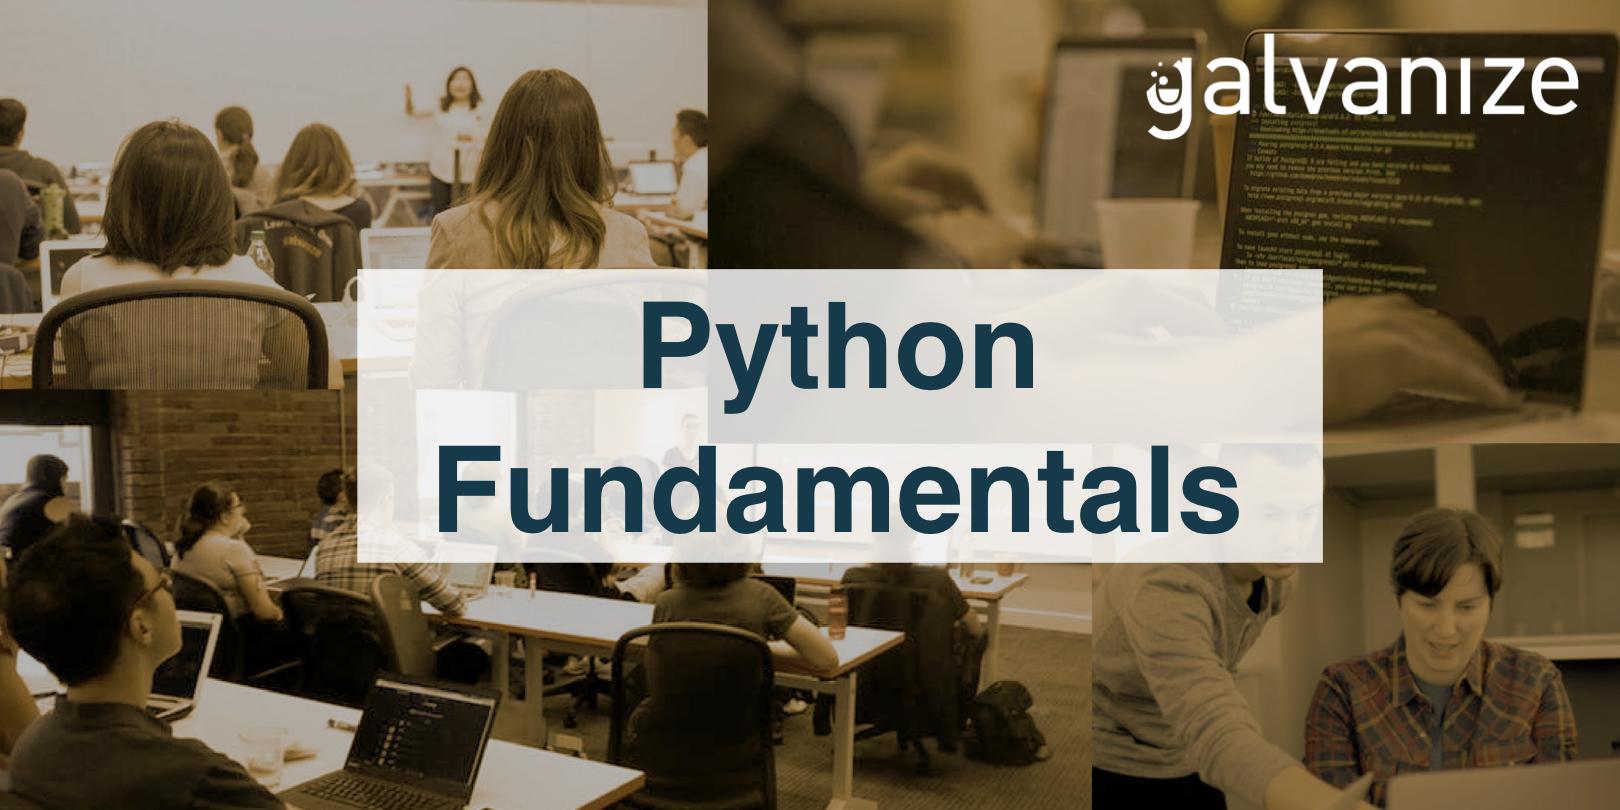 Python Fundamentals: Accelerated (1/13/20 - 1/30/20)